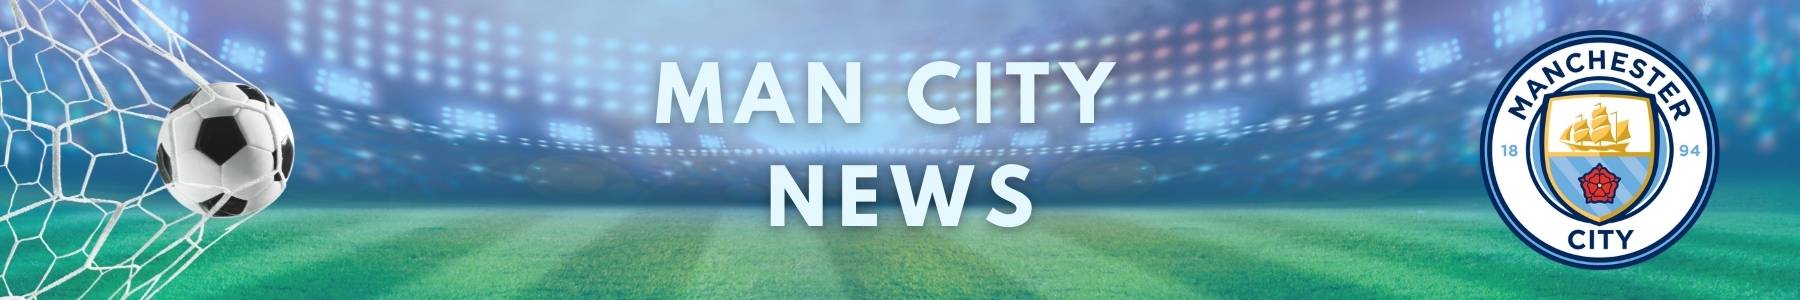 Man City News - Latest